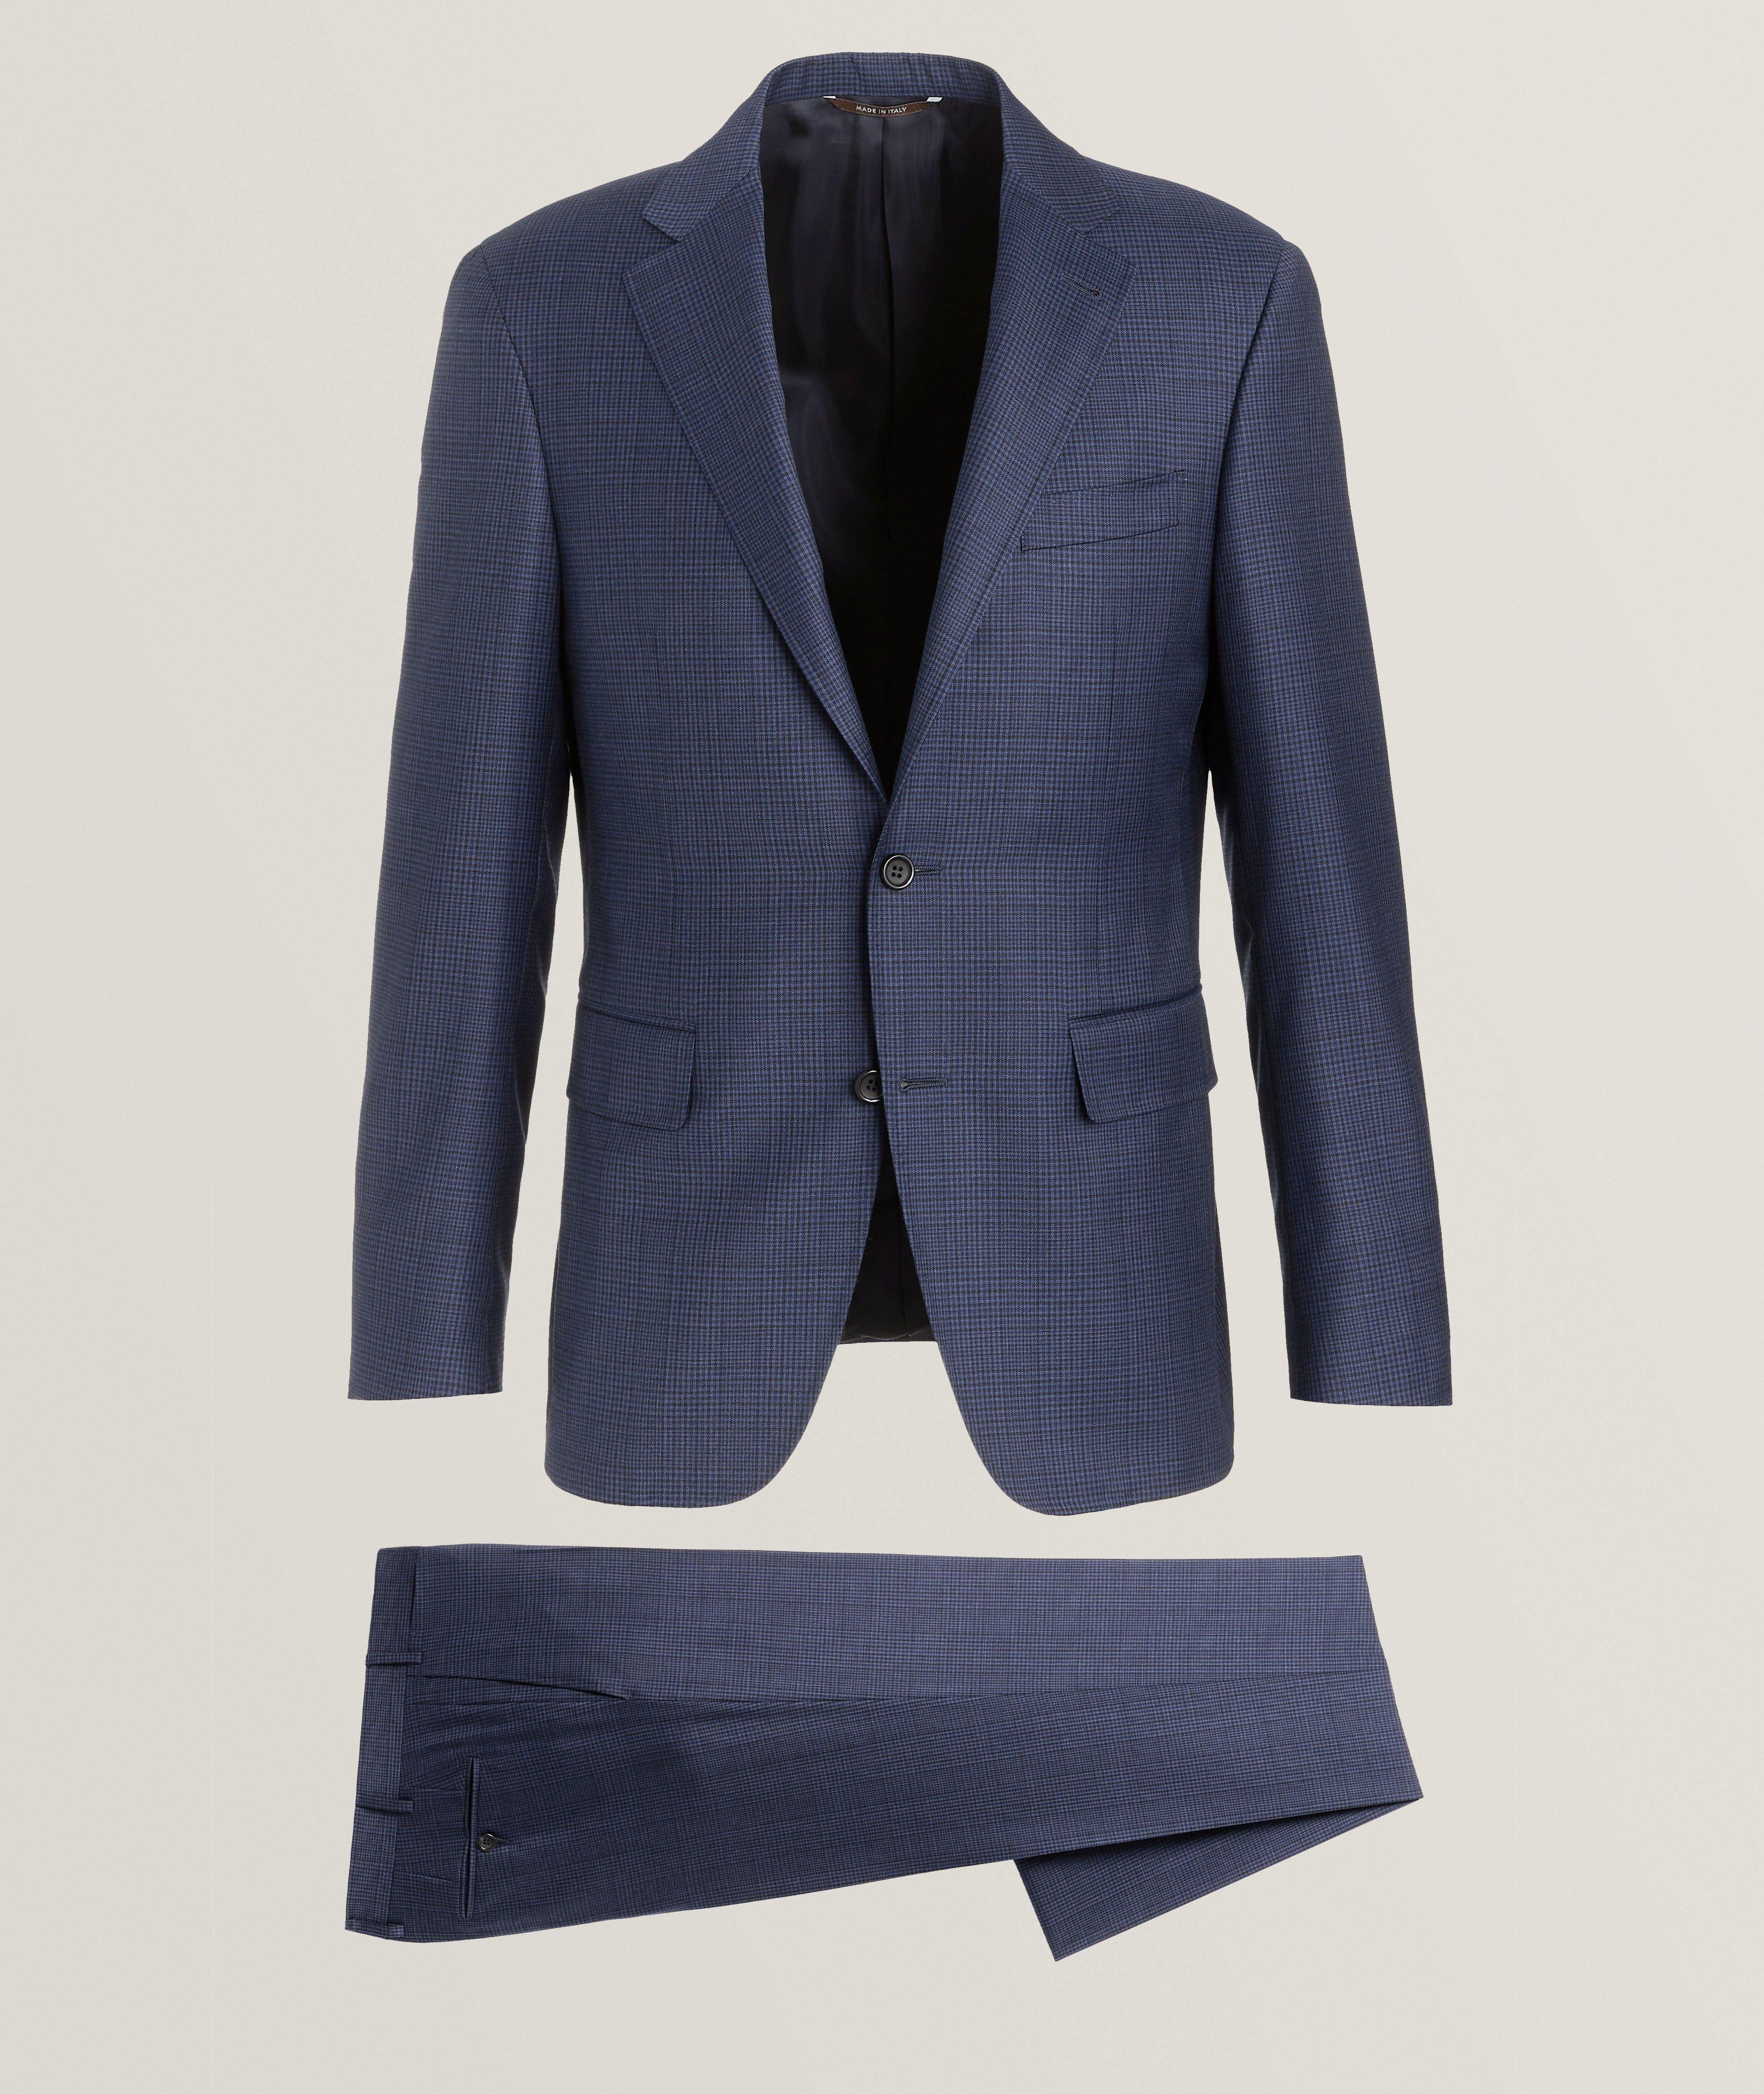 Kei Checkered Wool Suit